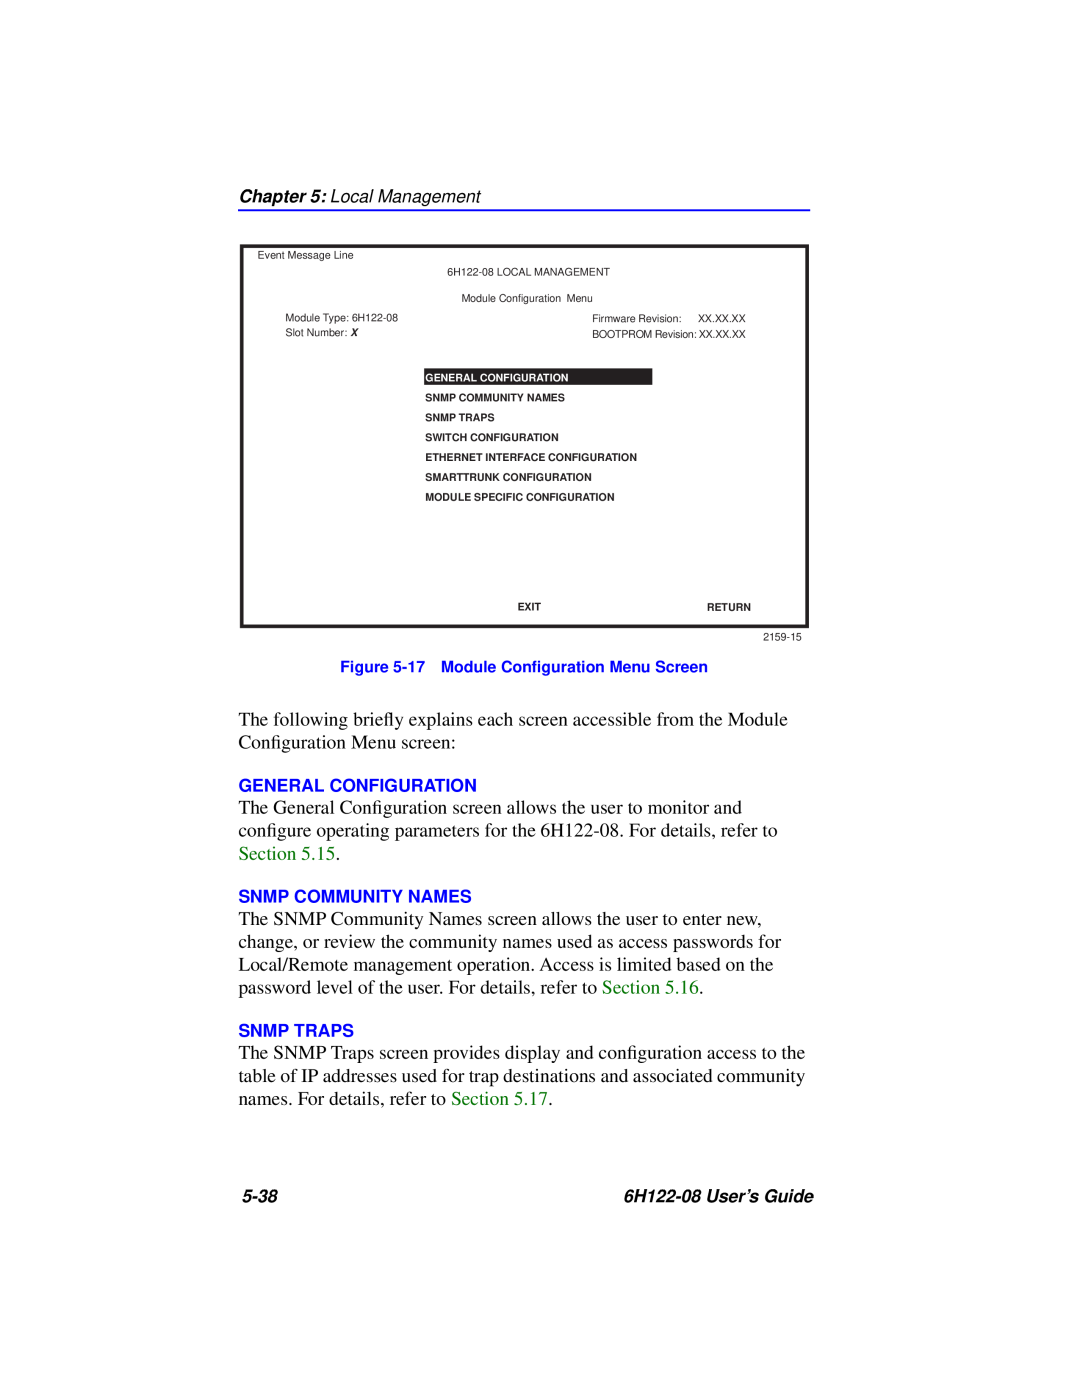 Cabletron Systems 6H122-08 manual 17 Module Conﬁguration Menu Screen, General Configuration 